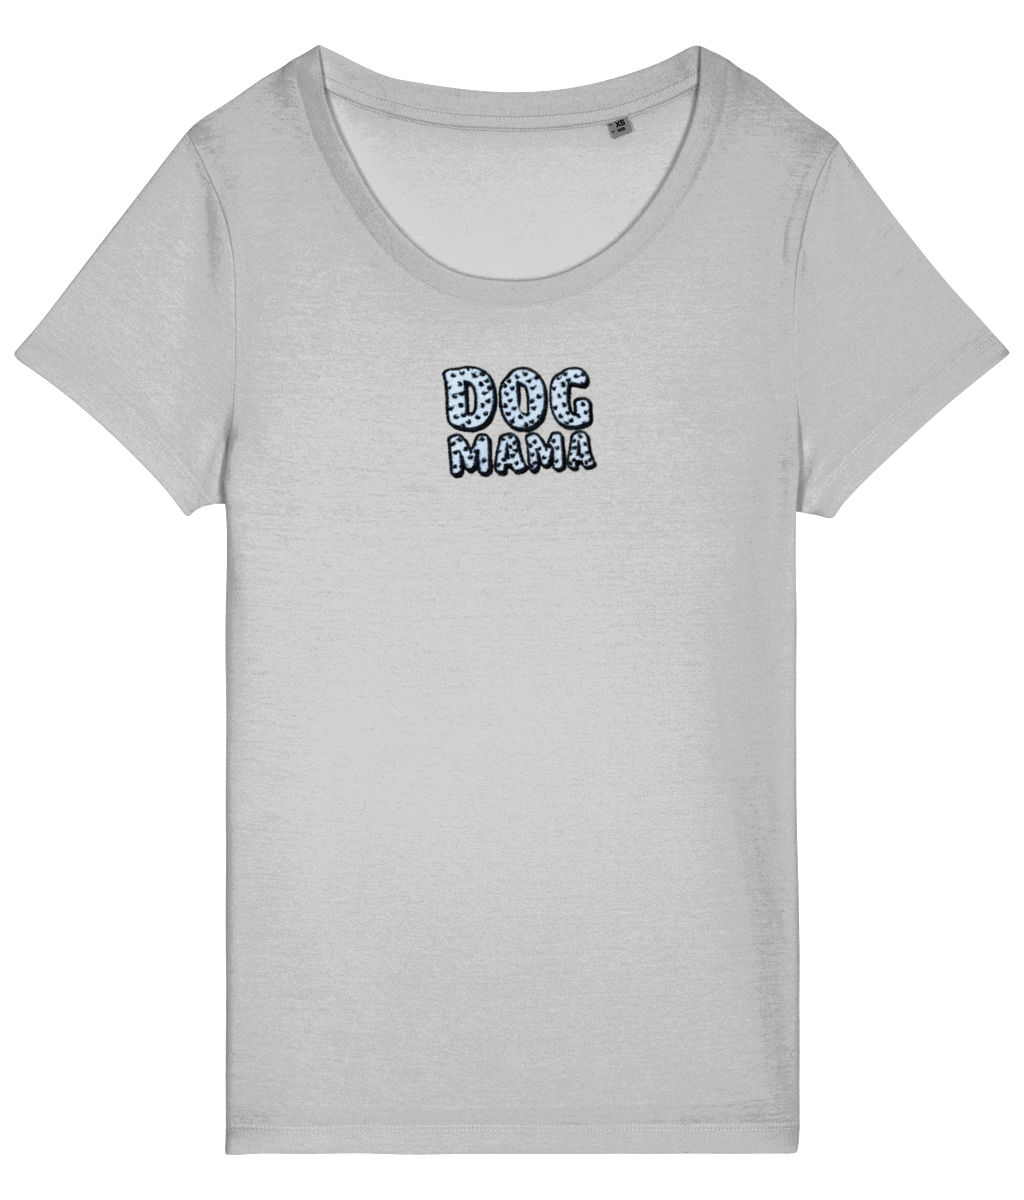 dog mama heart slogan embroidered t-shirt